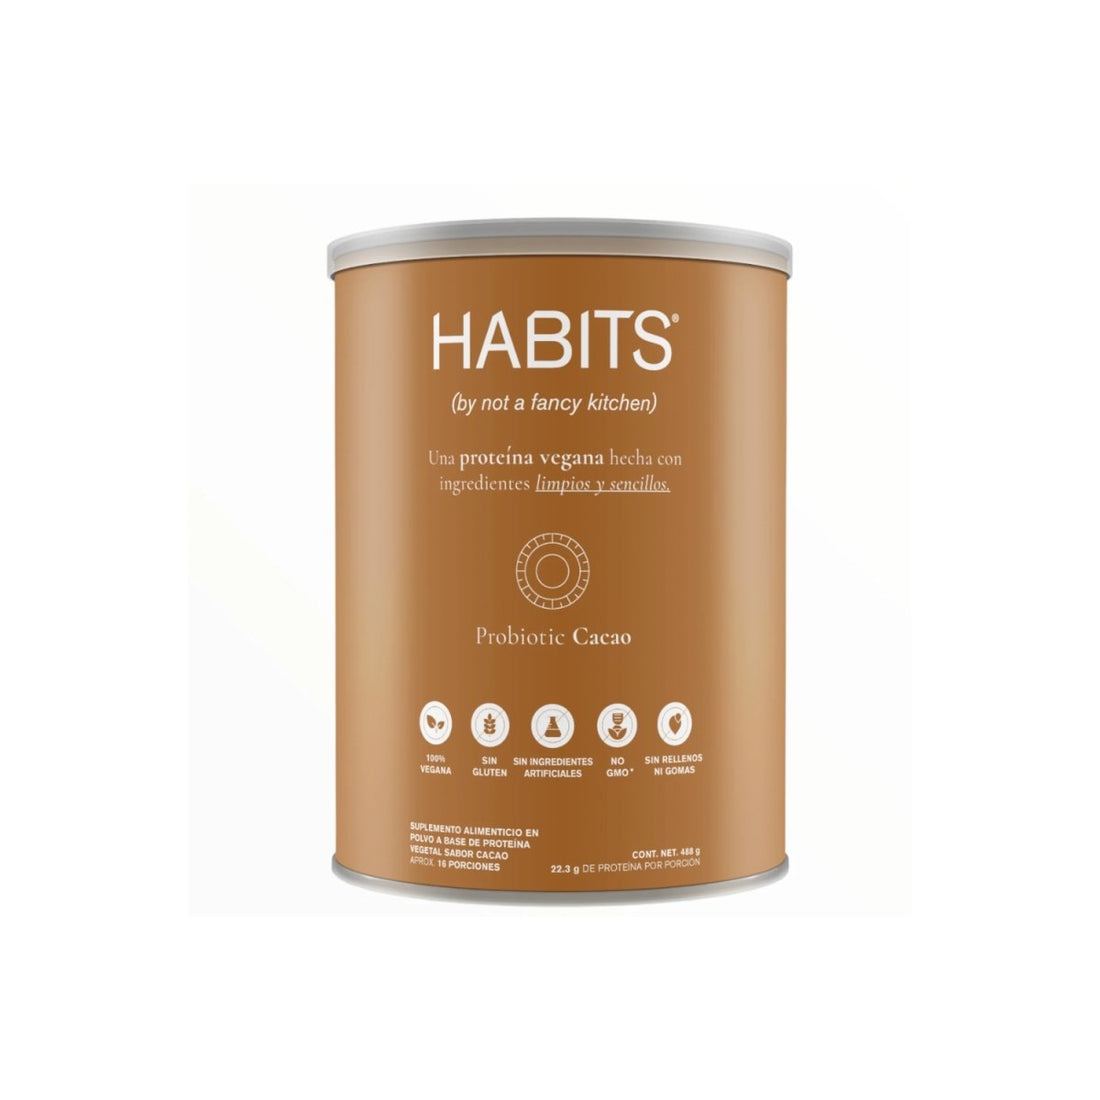 Habits Cacao - Good Express mx